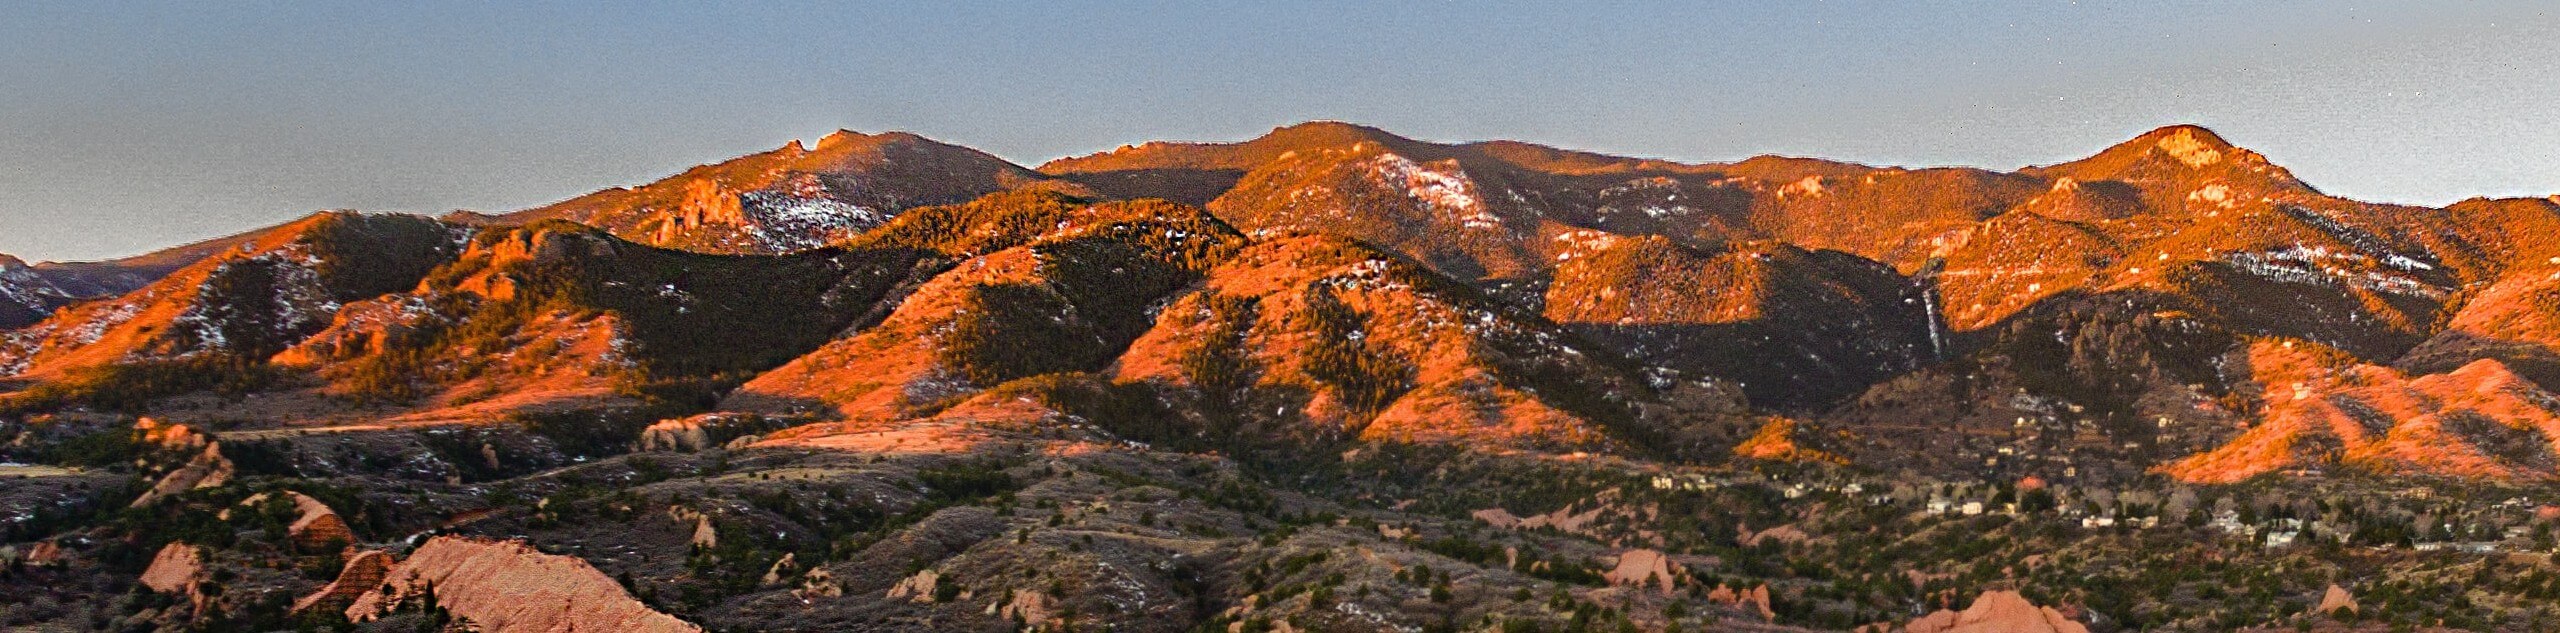 Mesa Trail to Red Rock Canyon Loop